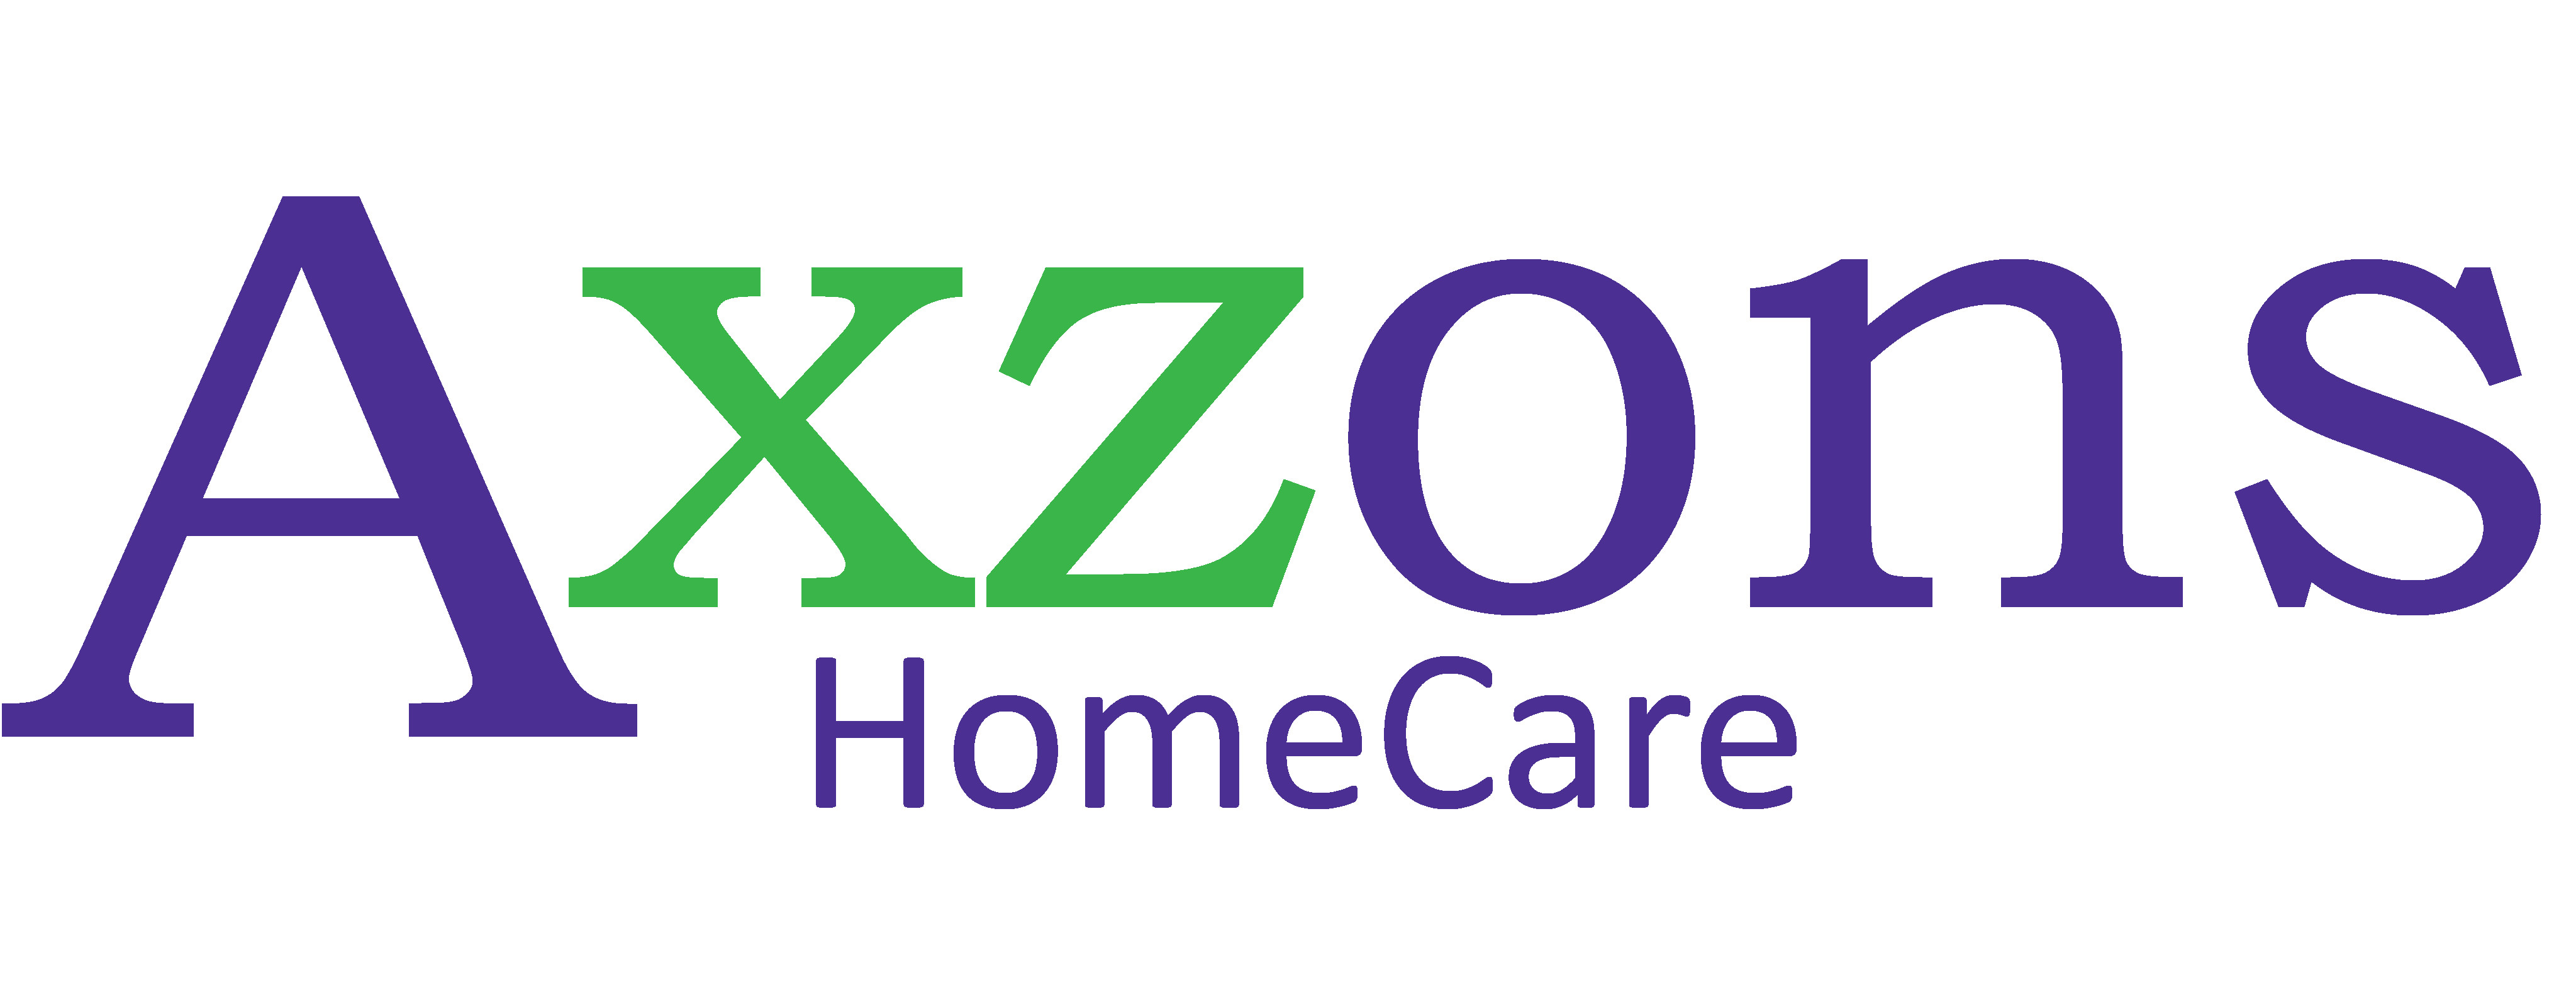 Axzons Homecare Profile Picture